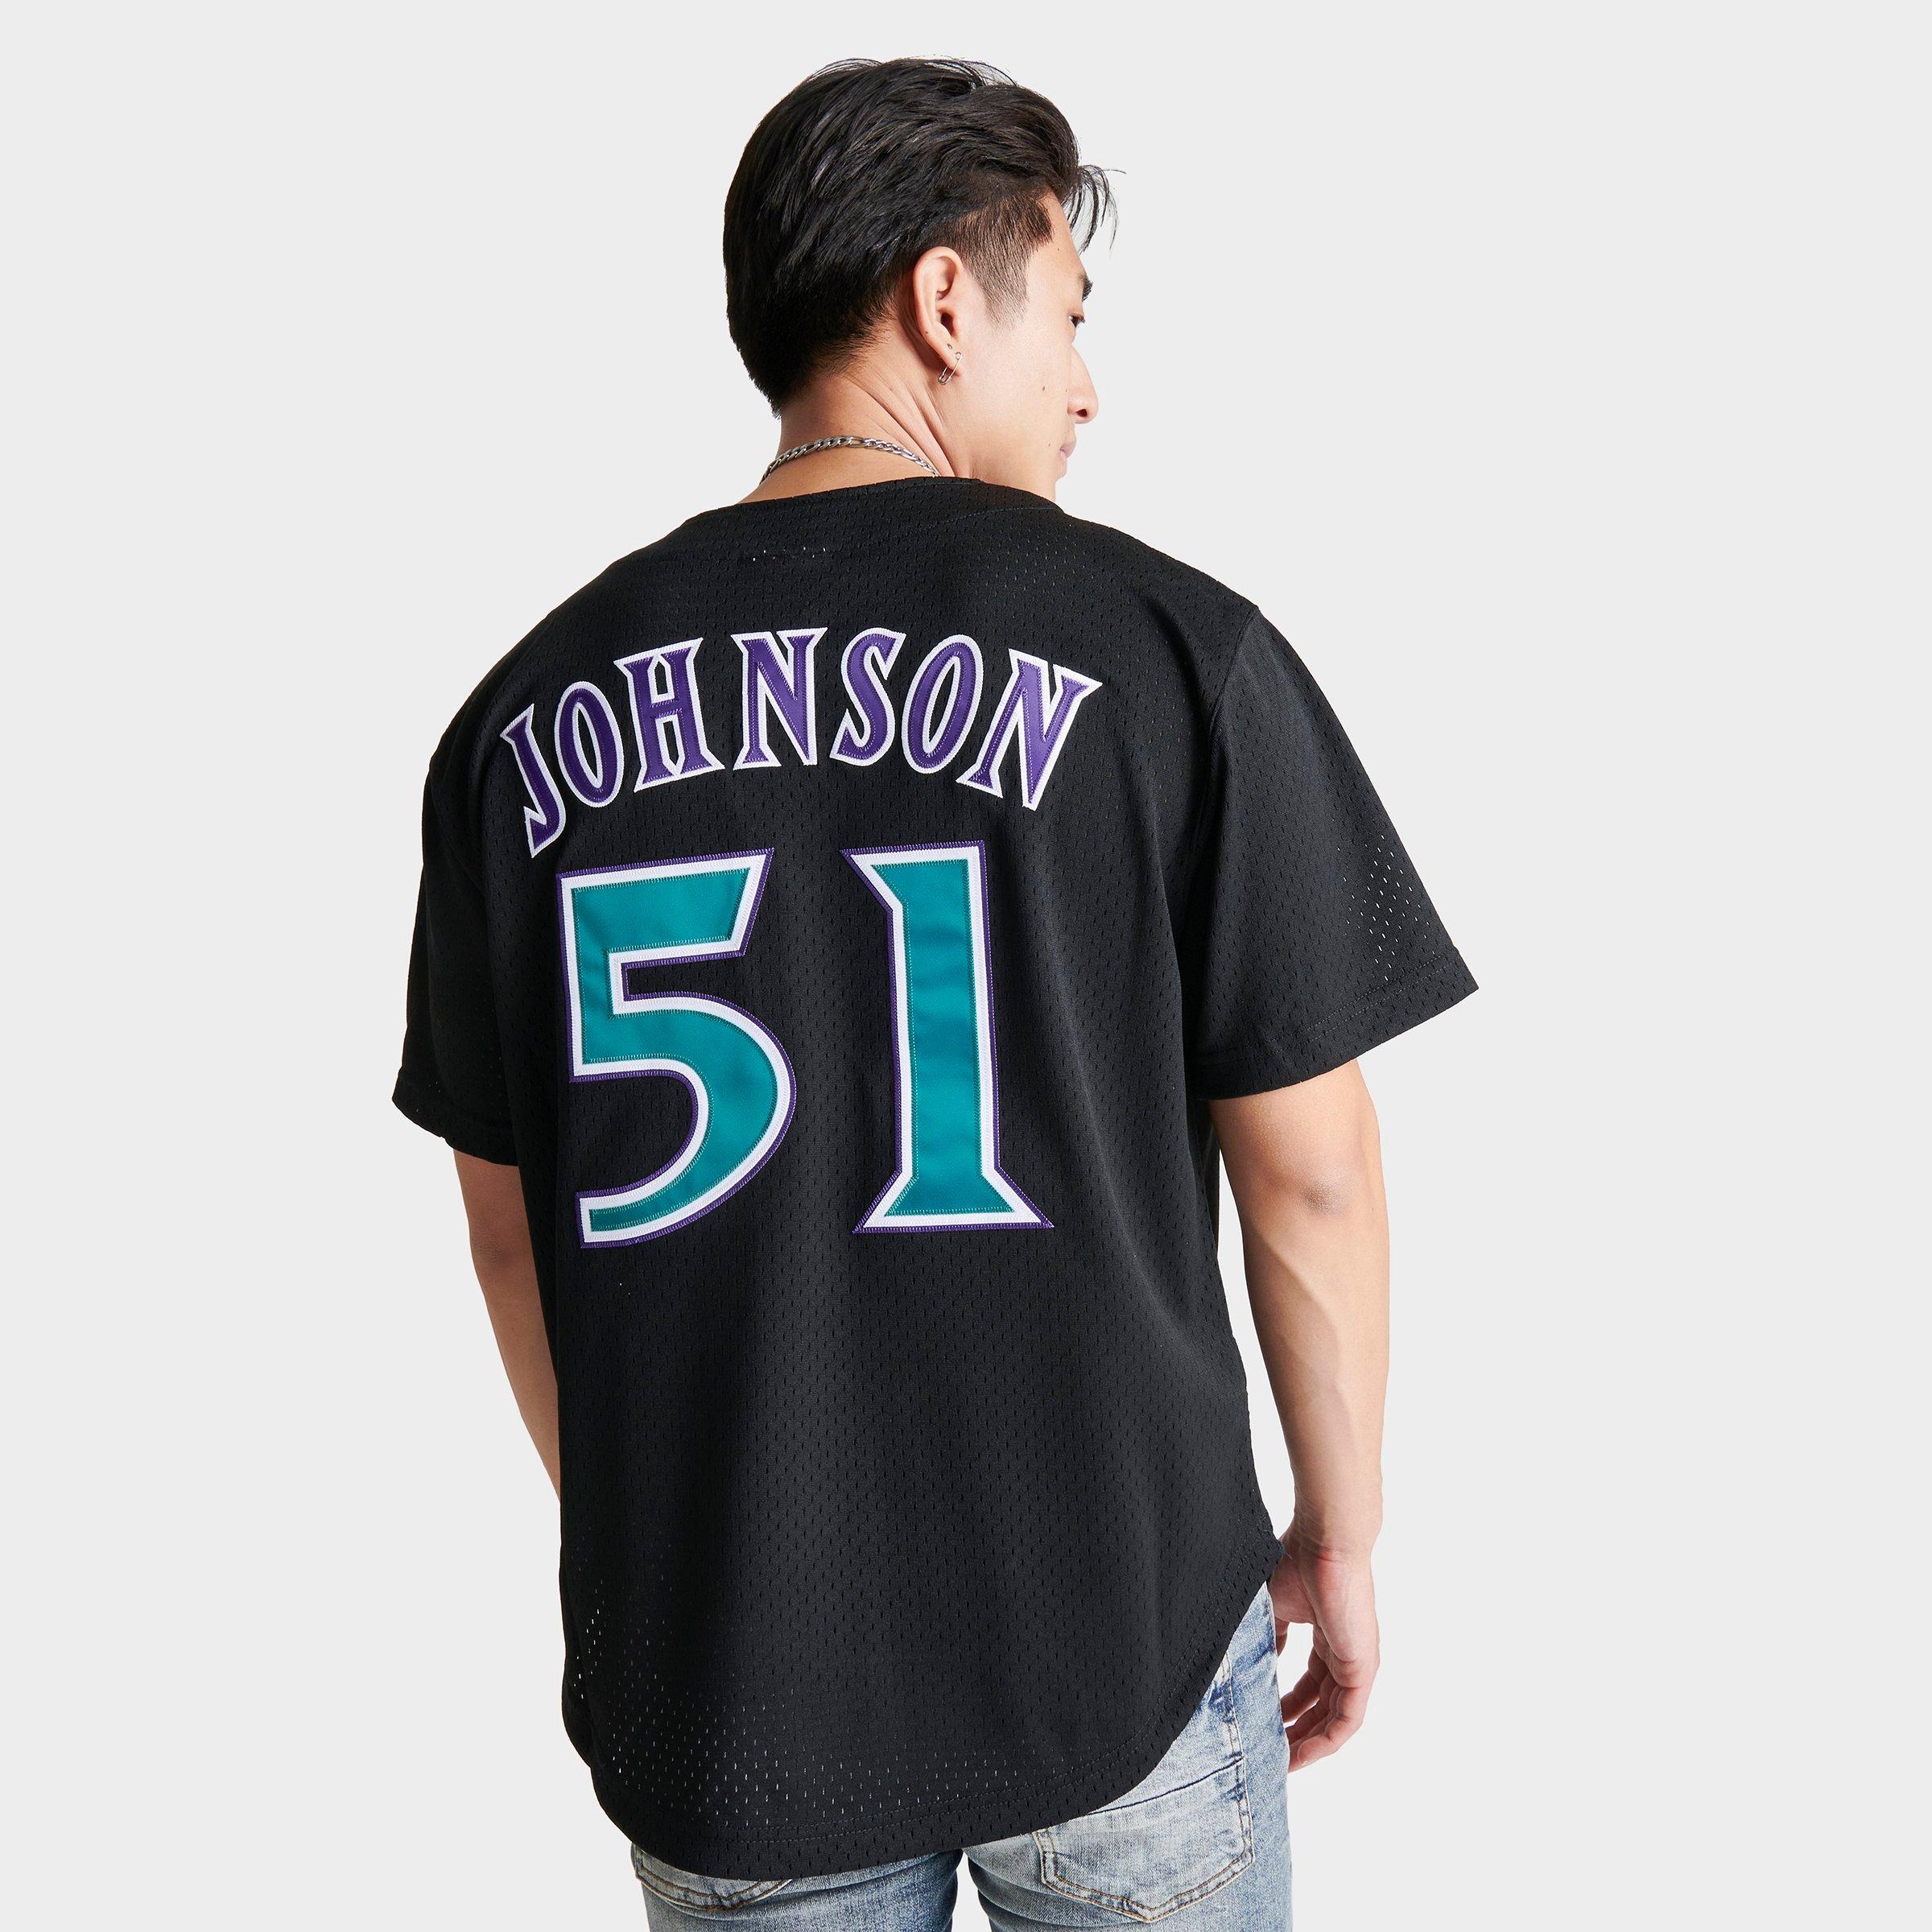 Randy Johnson jersey